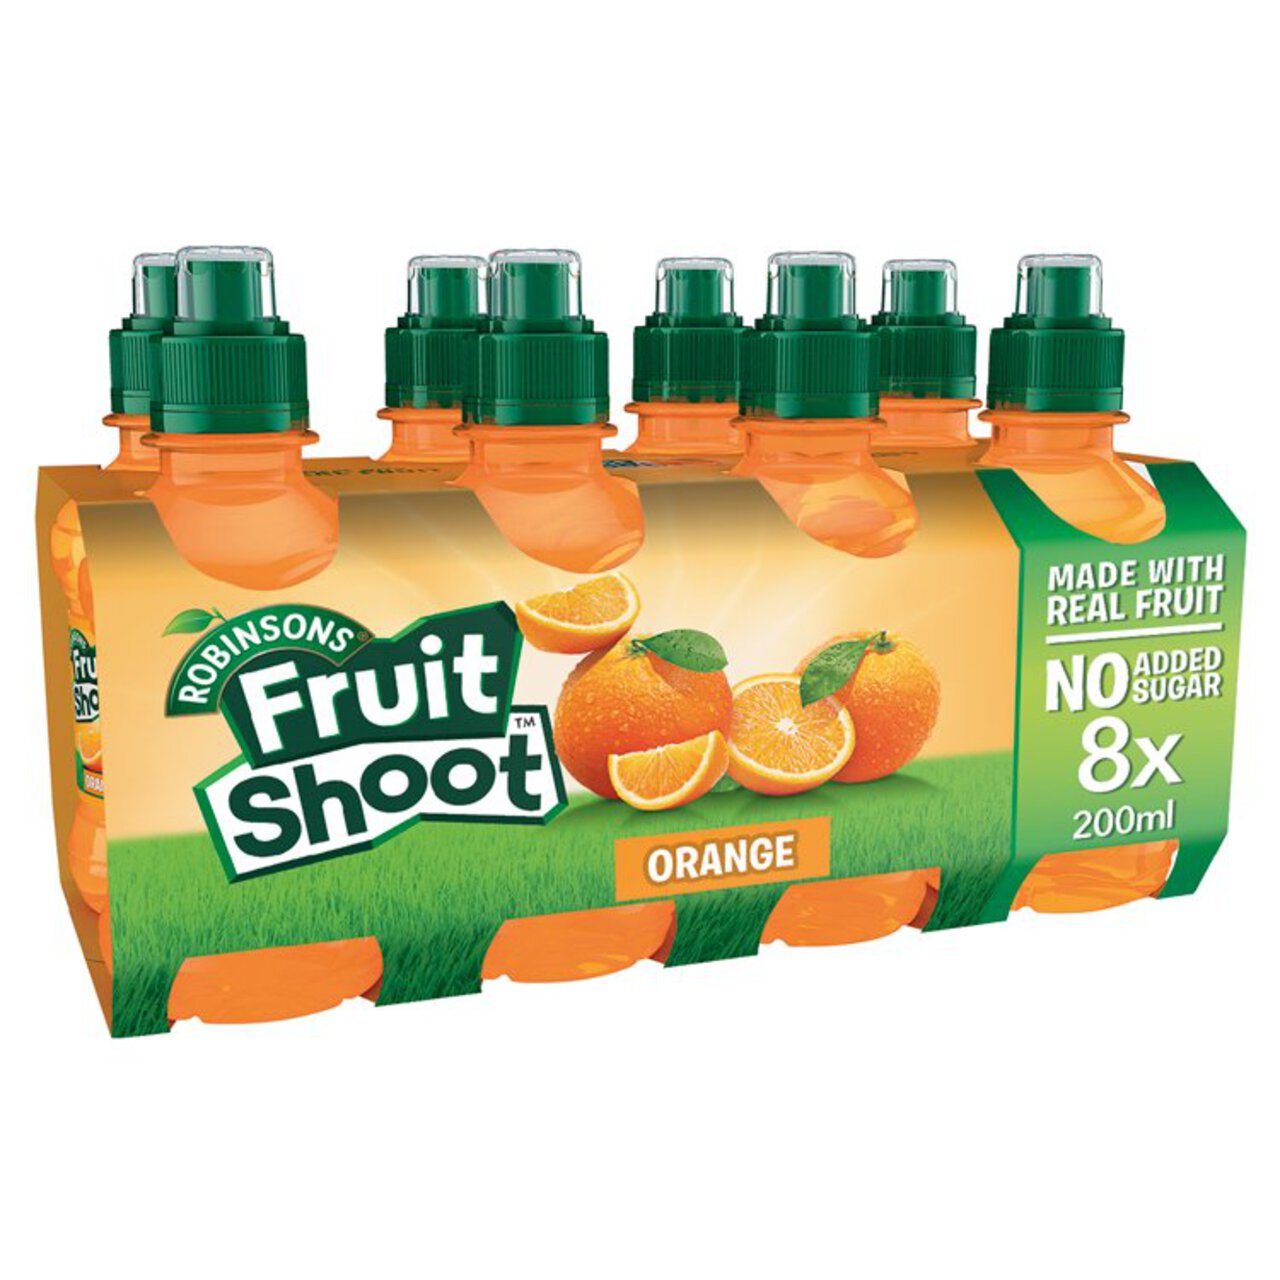 Fruit Shoot Orange No Added Sugar 8 x 200ml